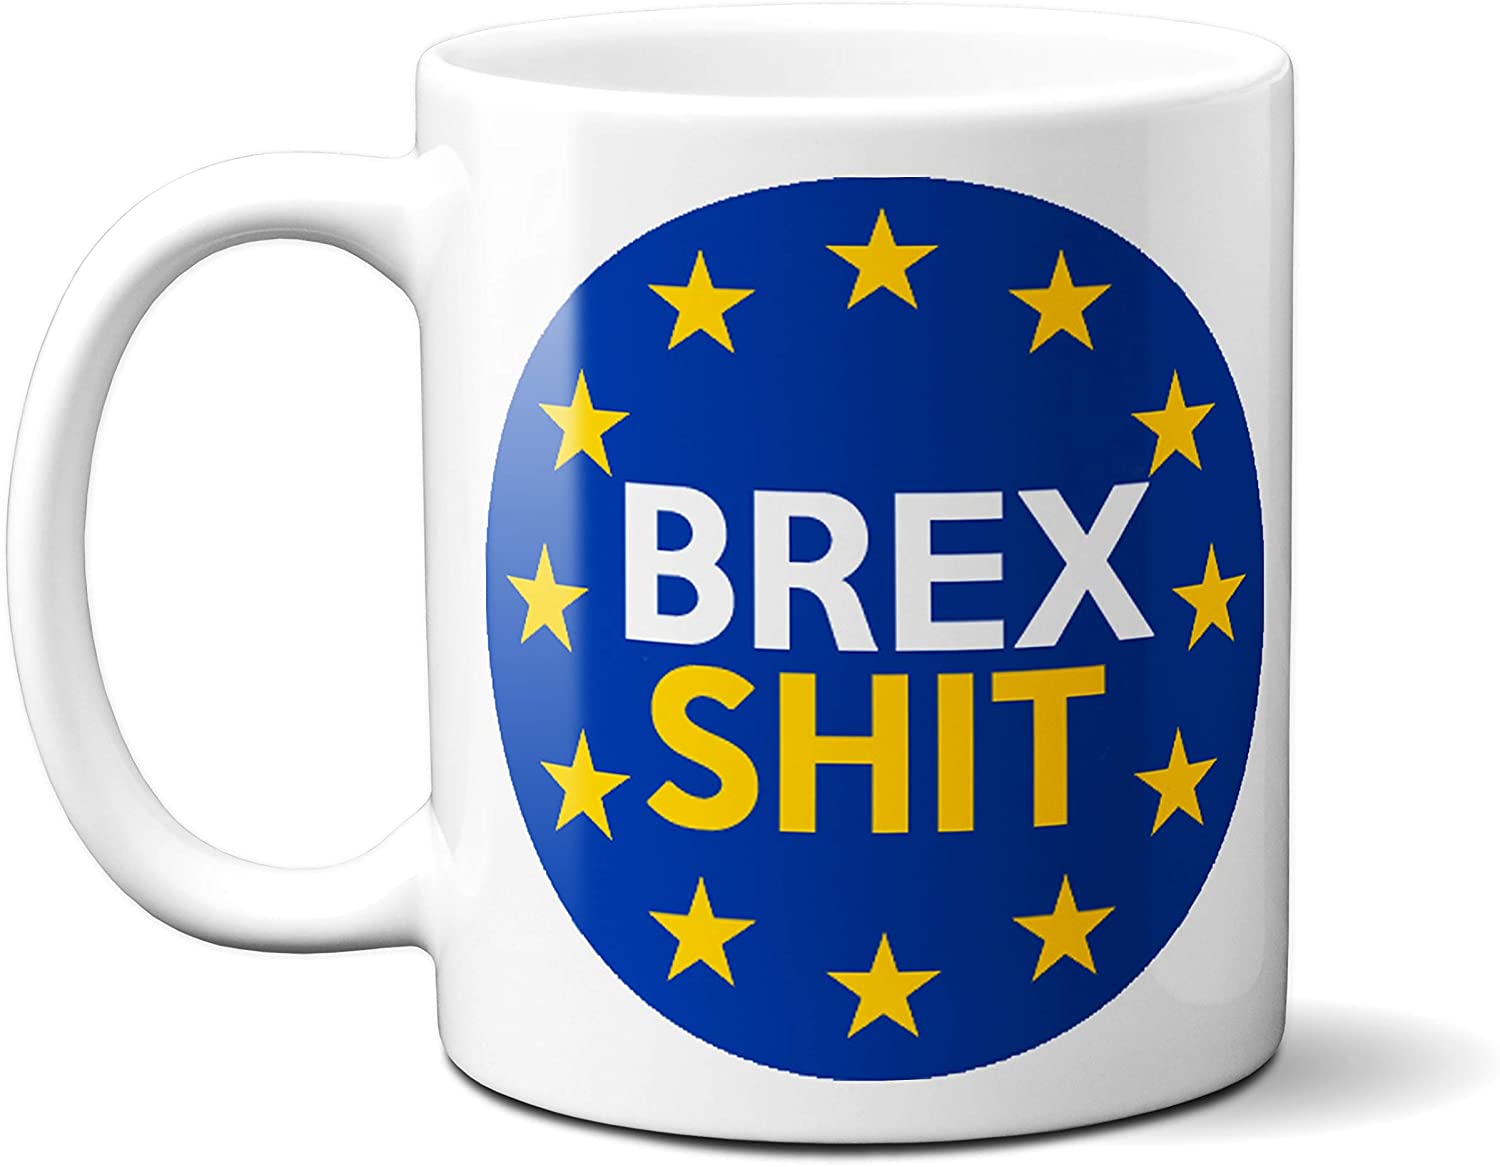 Brexshit mug leave the EU is a crap move